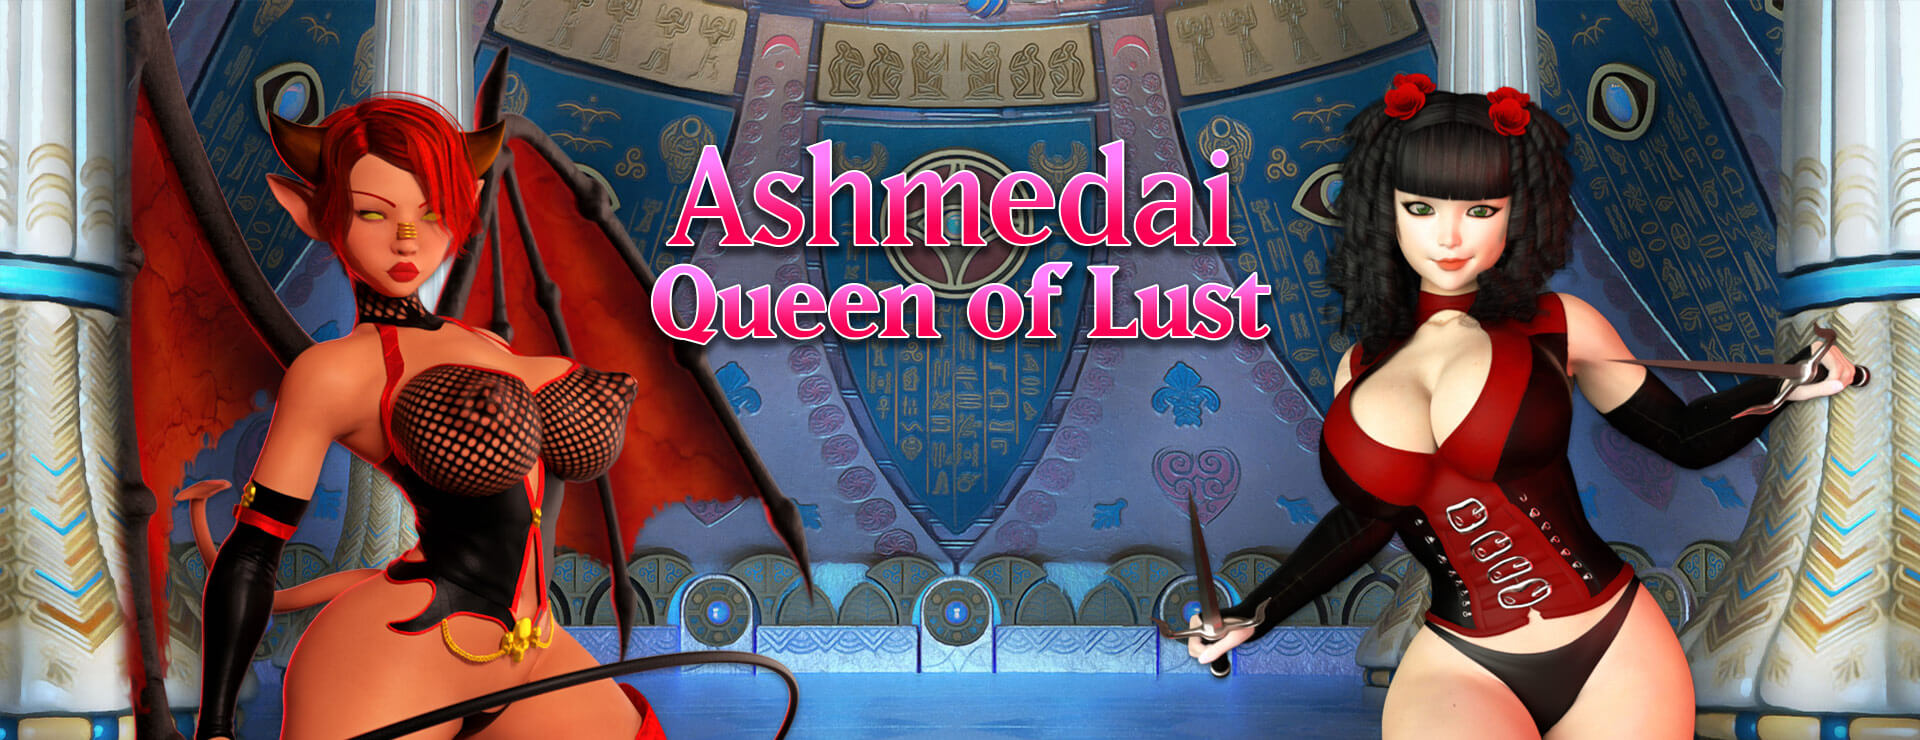 Ashmedai - Queen of Lust - RPG Spiel